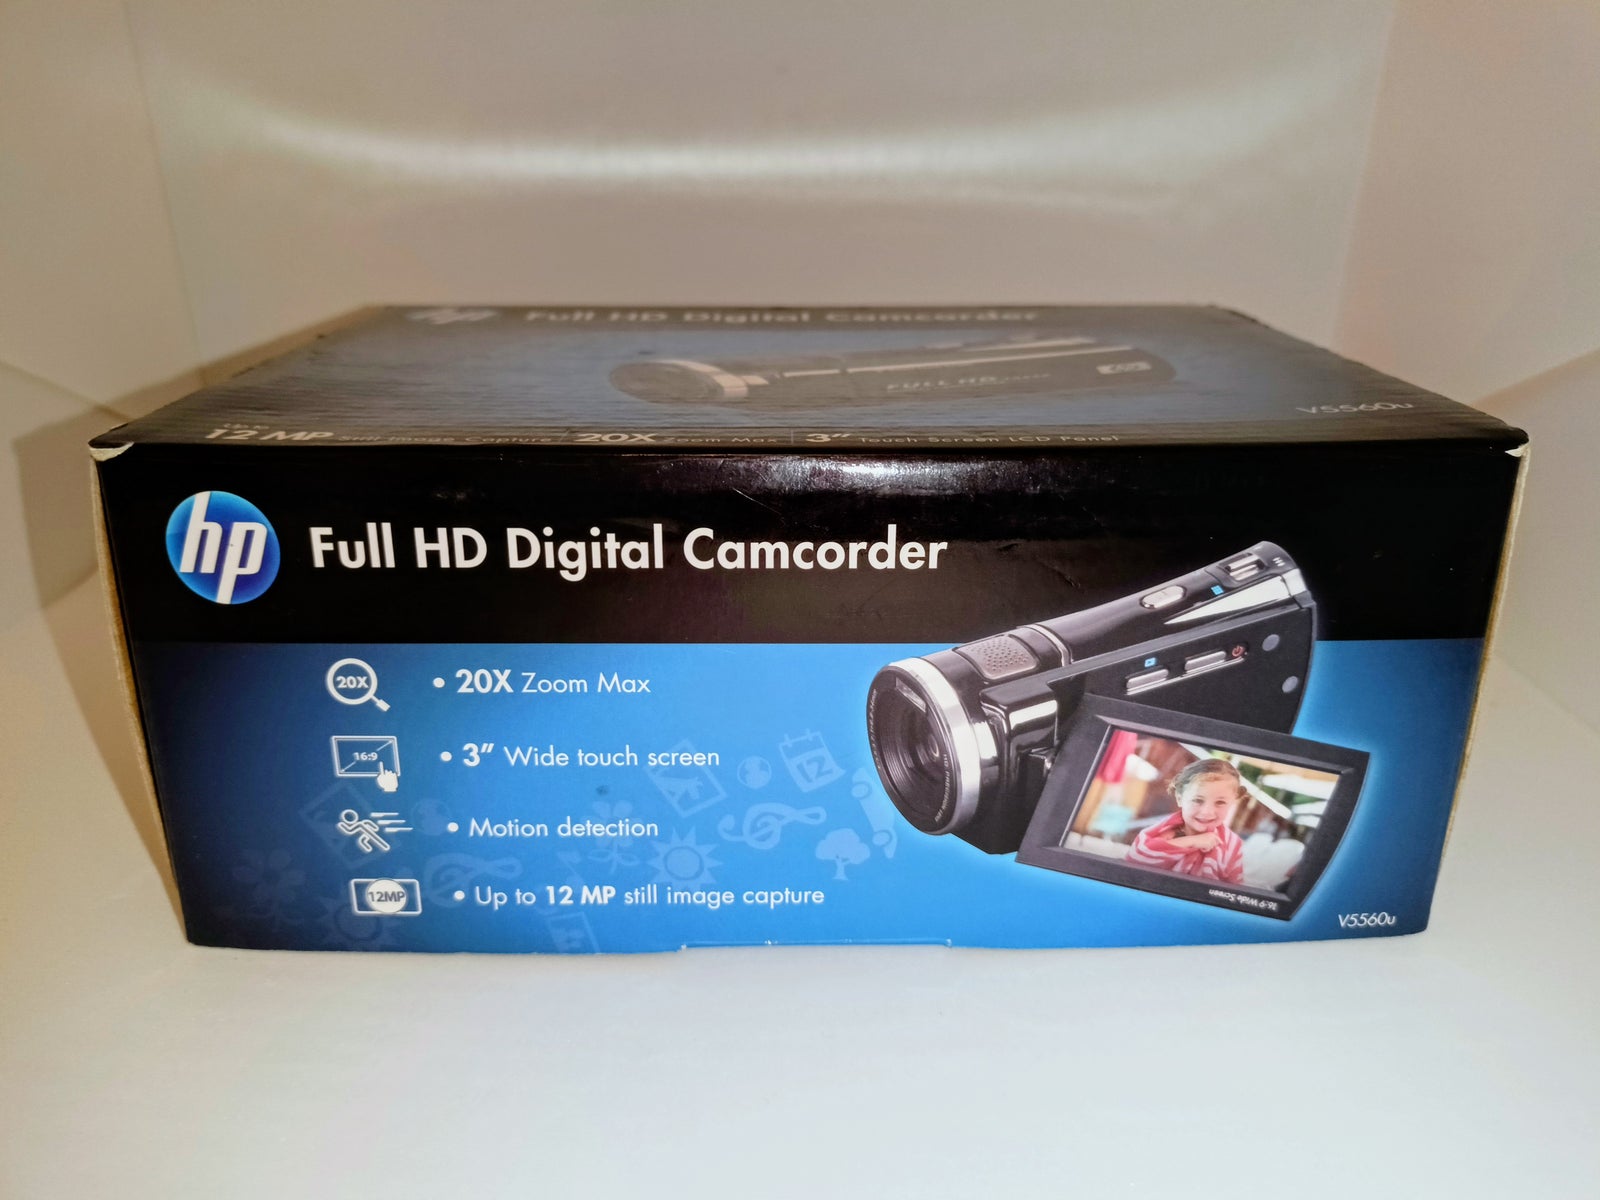 Fuld HD digitalt videokamera, HP, V5560u